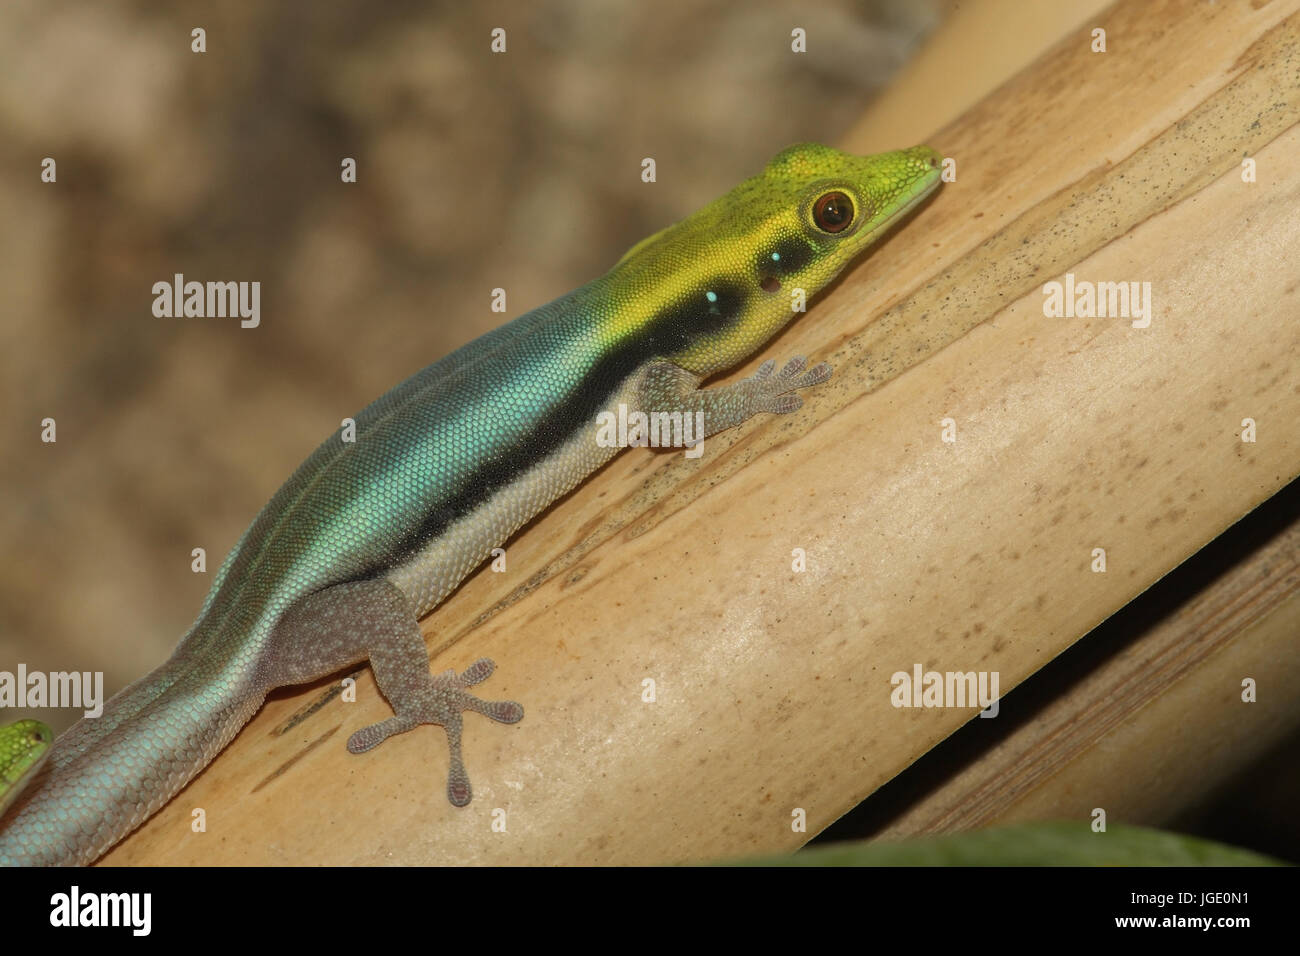 Blue bamboo-day gecko, Blauer Bambus-Taggecko Stock Photo - Alamy